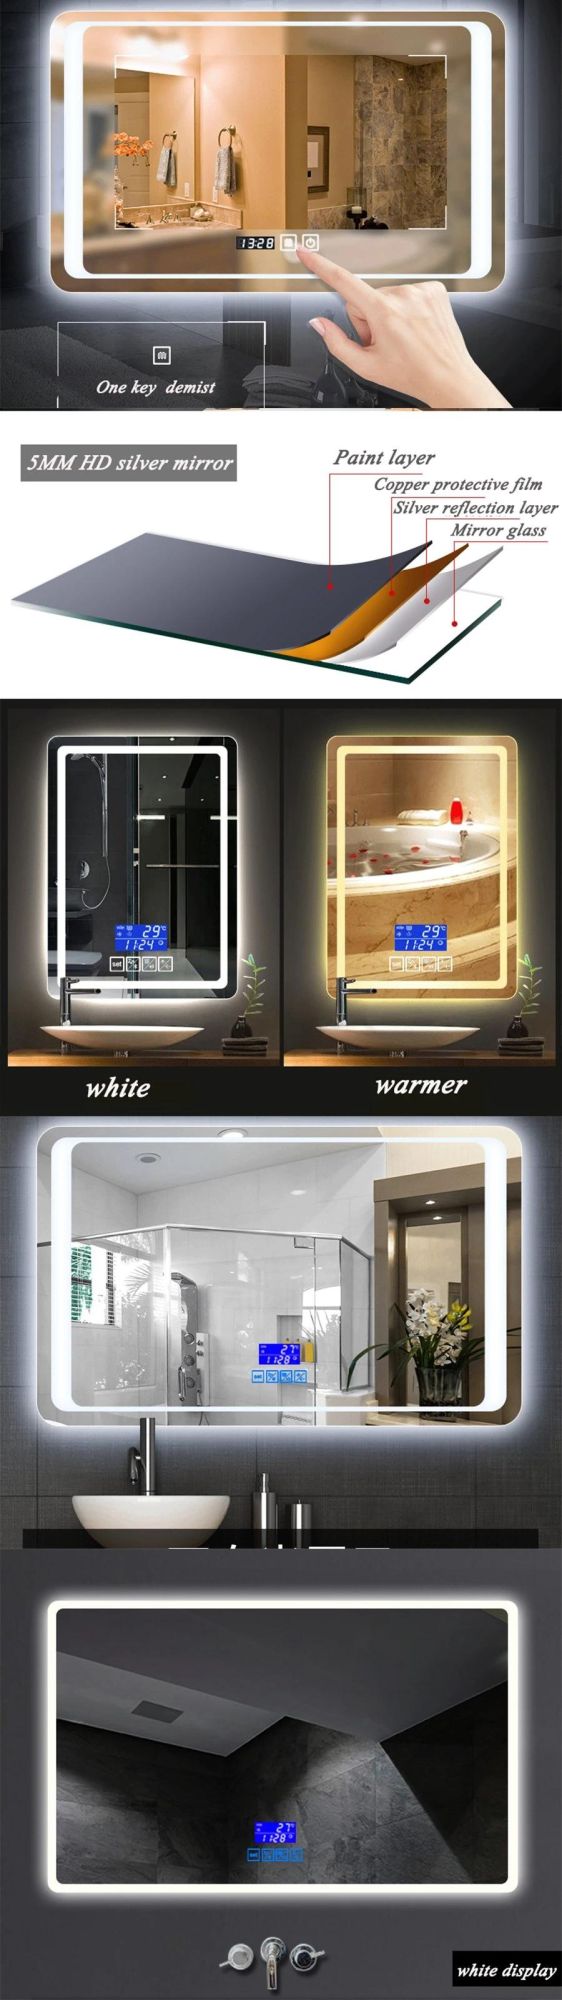 Defogger Lighted Bluetooth Digital Clock LED Bathroom Smart Mirror (Bg-010)